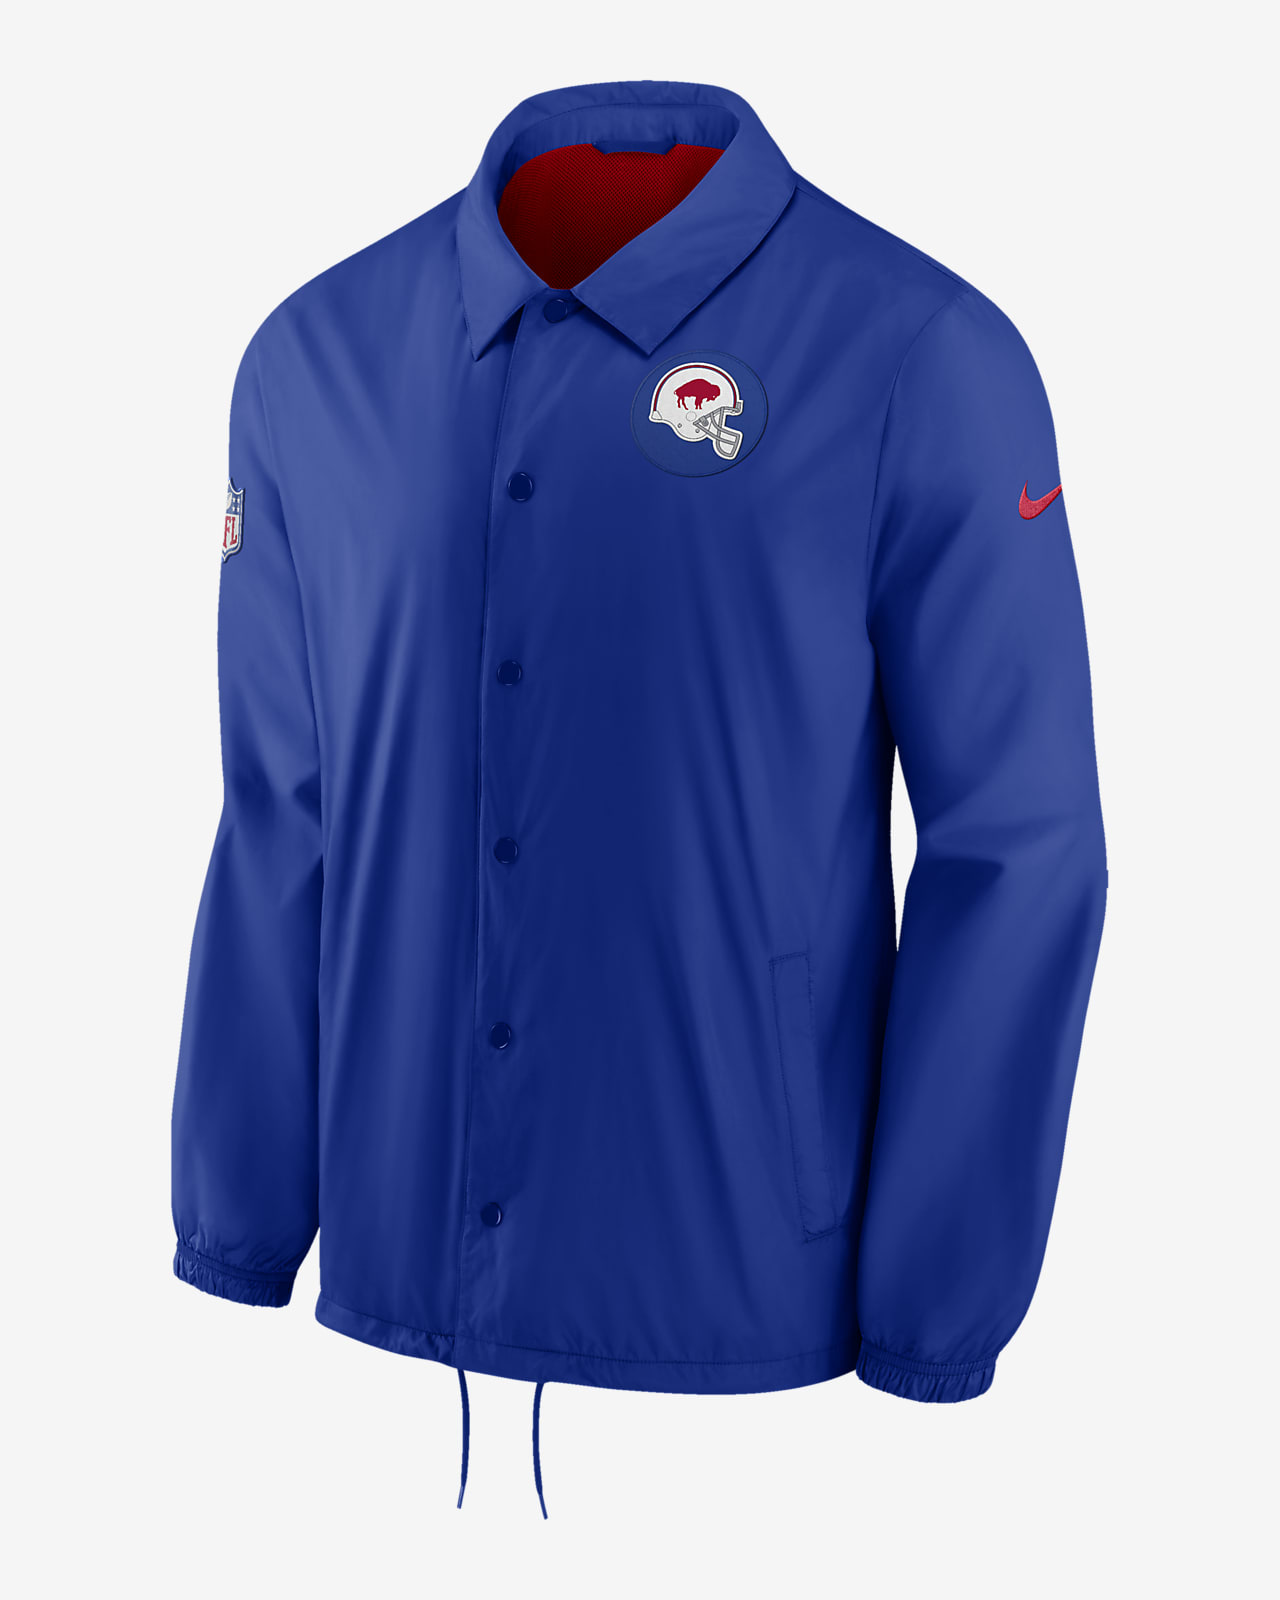 Nike Coaches (NFL Buffalo Bills) Men's Jacket